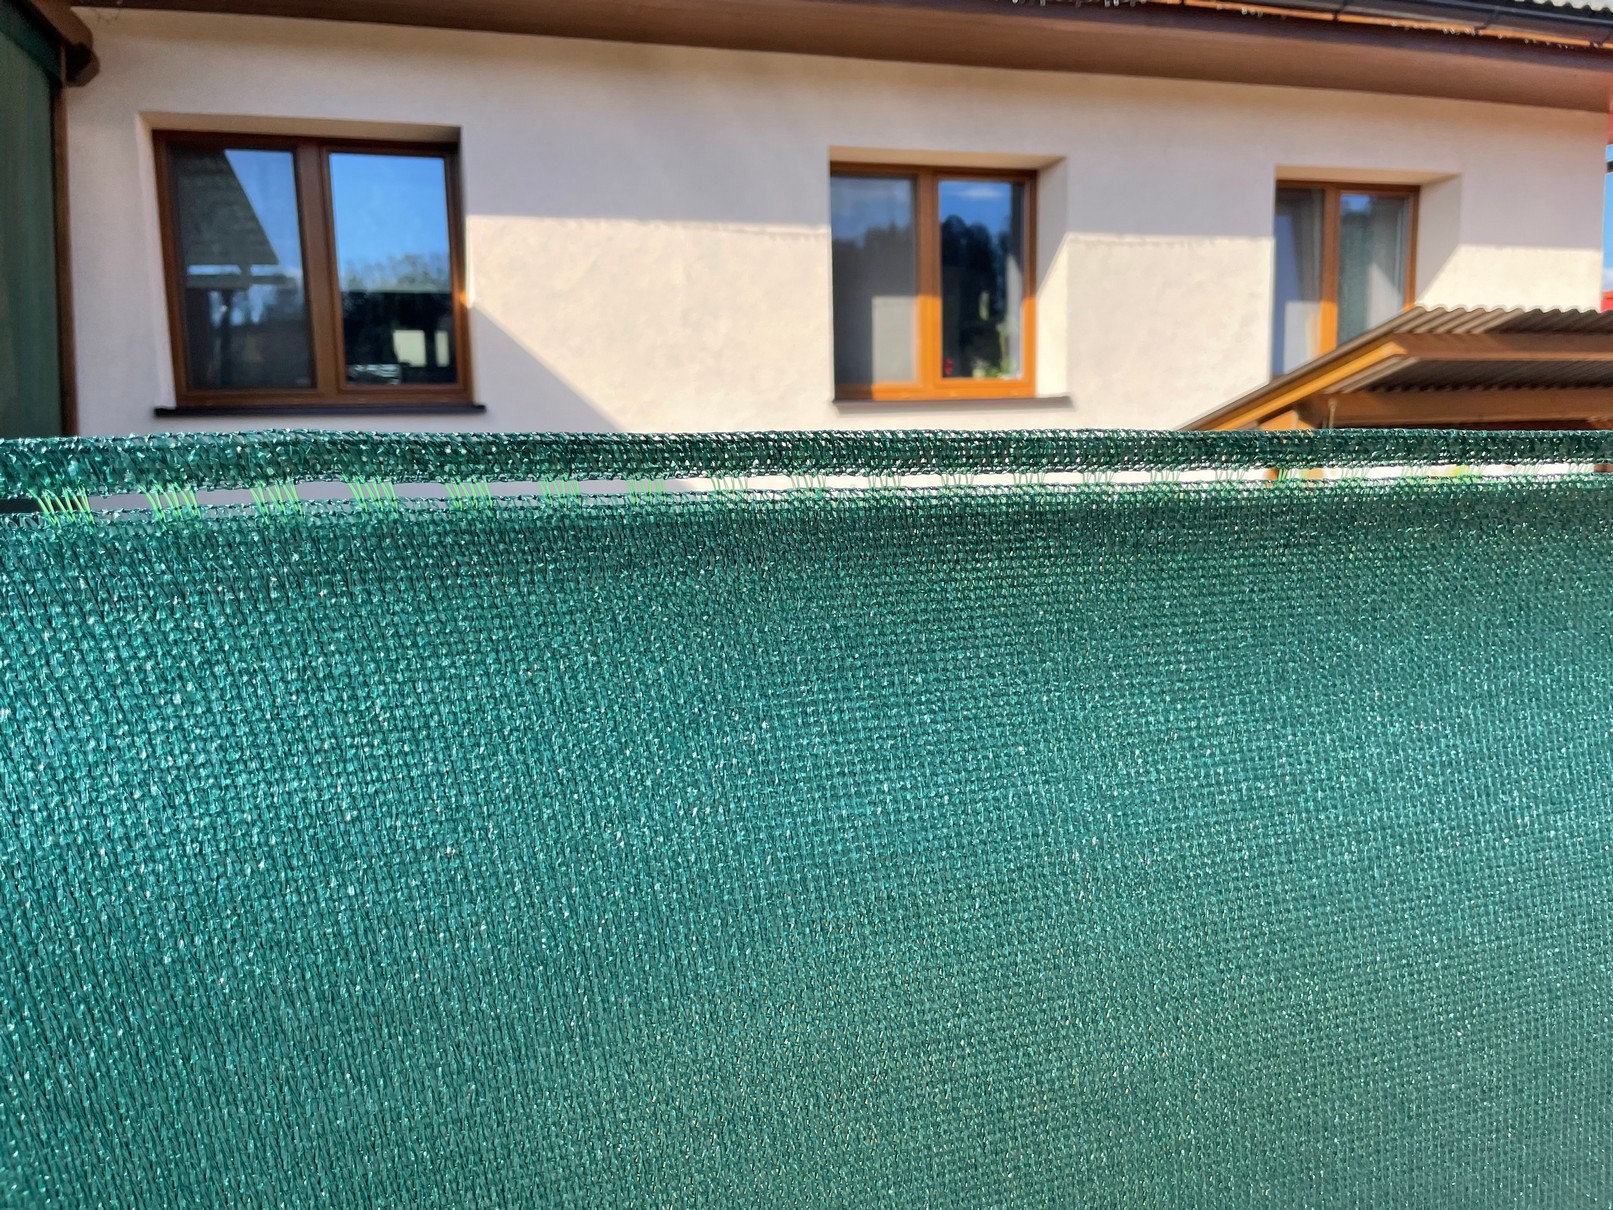 GTEX Stínící tkanina, rašlový úplet 100%, 200g/m2, výška 1m, metráž po 5m (5,10,15,20m) zelená ZAHRADA Sklad6 0001